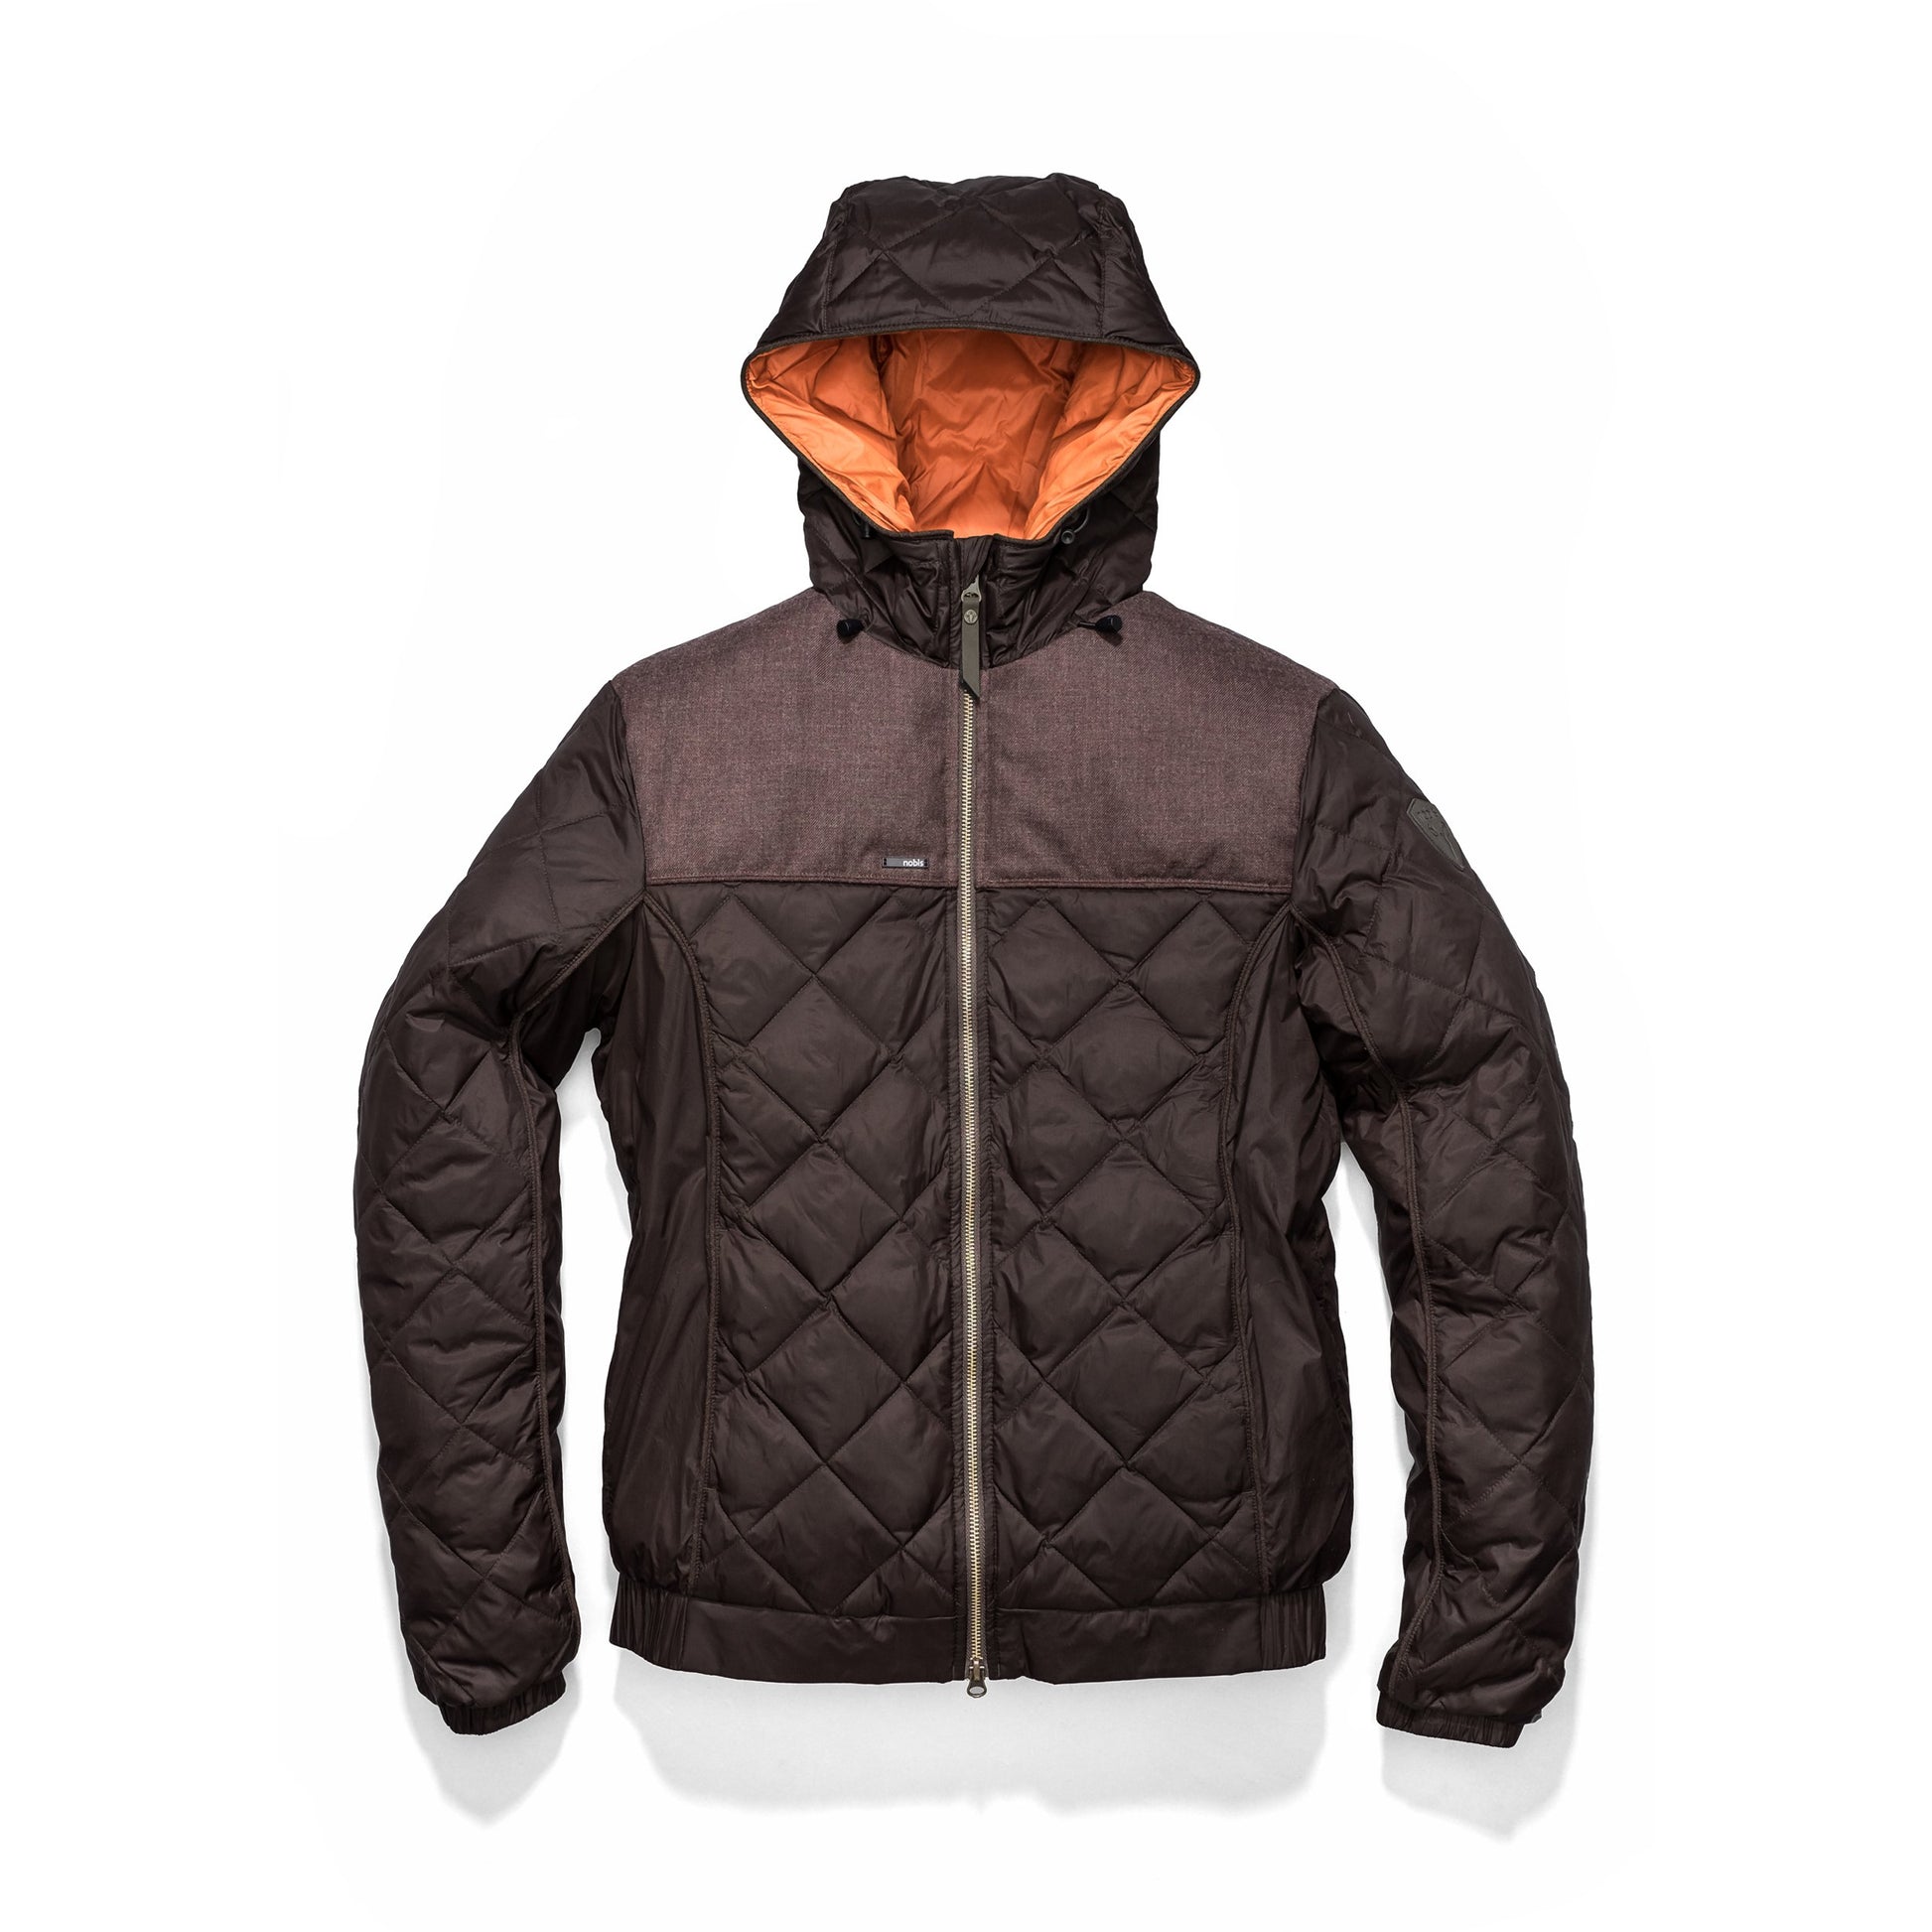 Branded, Stylish and Premium Quality berber fleece hoodies